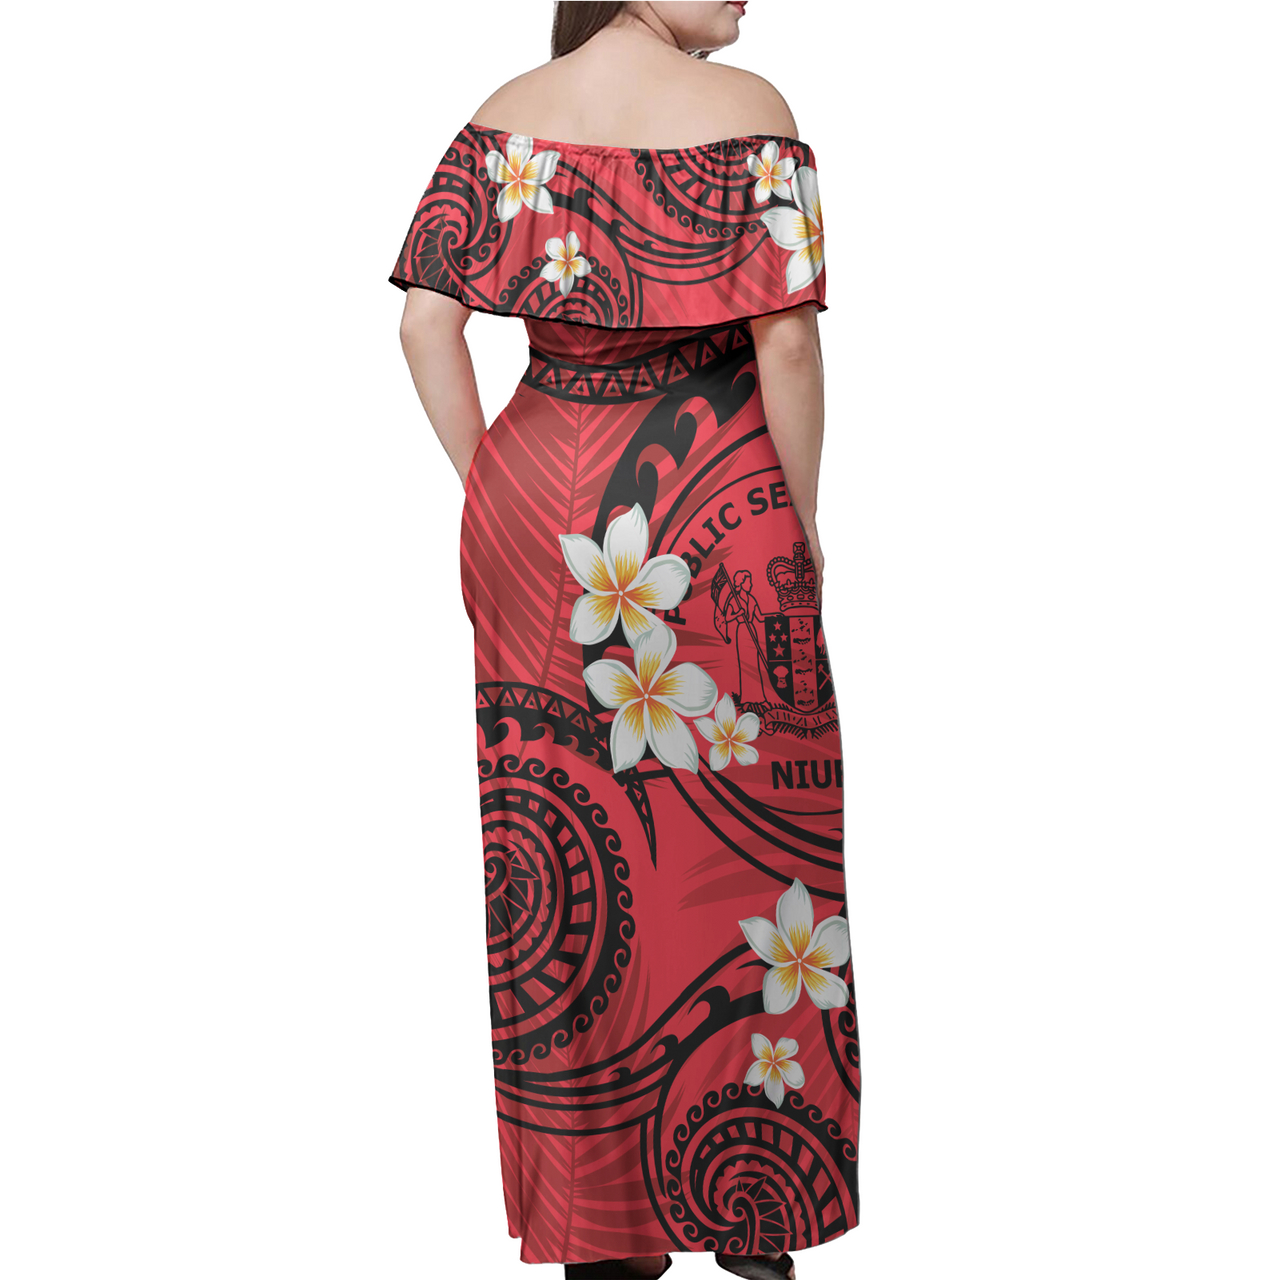 Niue Off Shoulder Long Dress Plumeria Flowers Tribal Motif Red Version